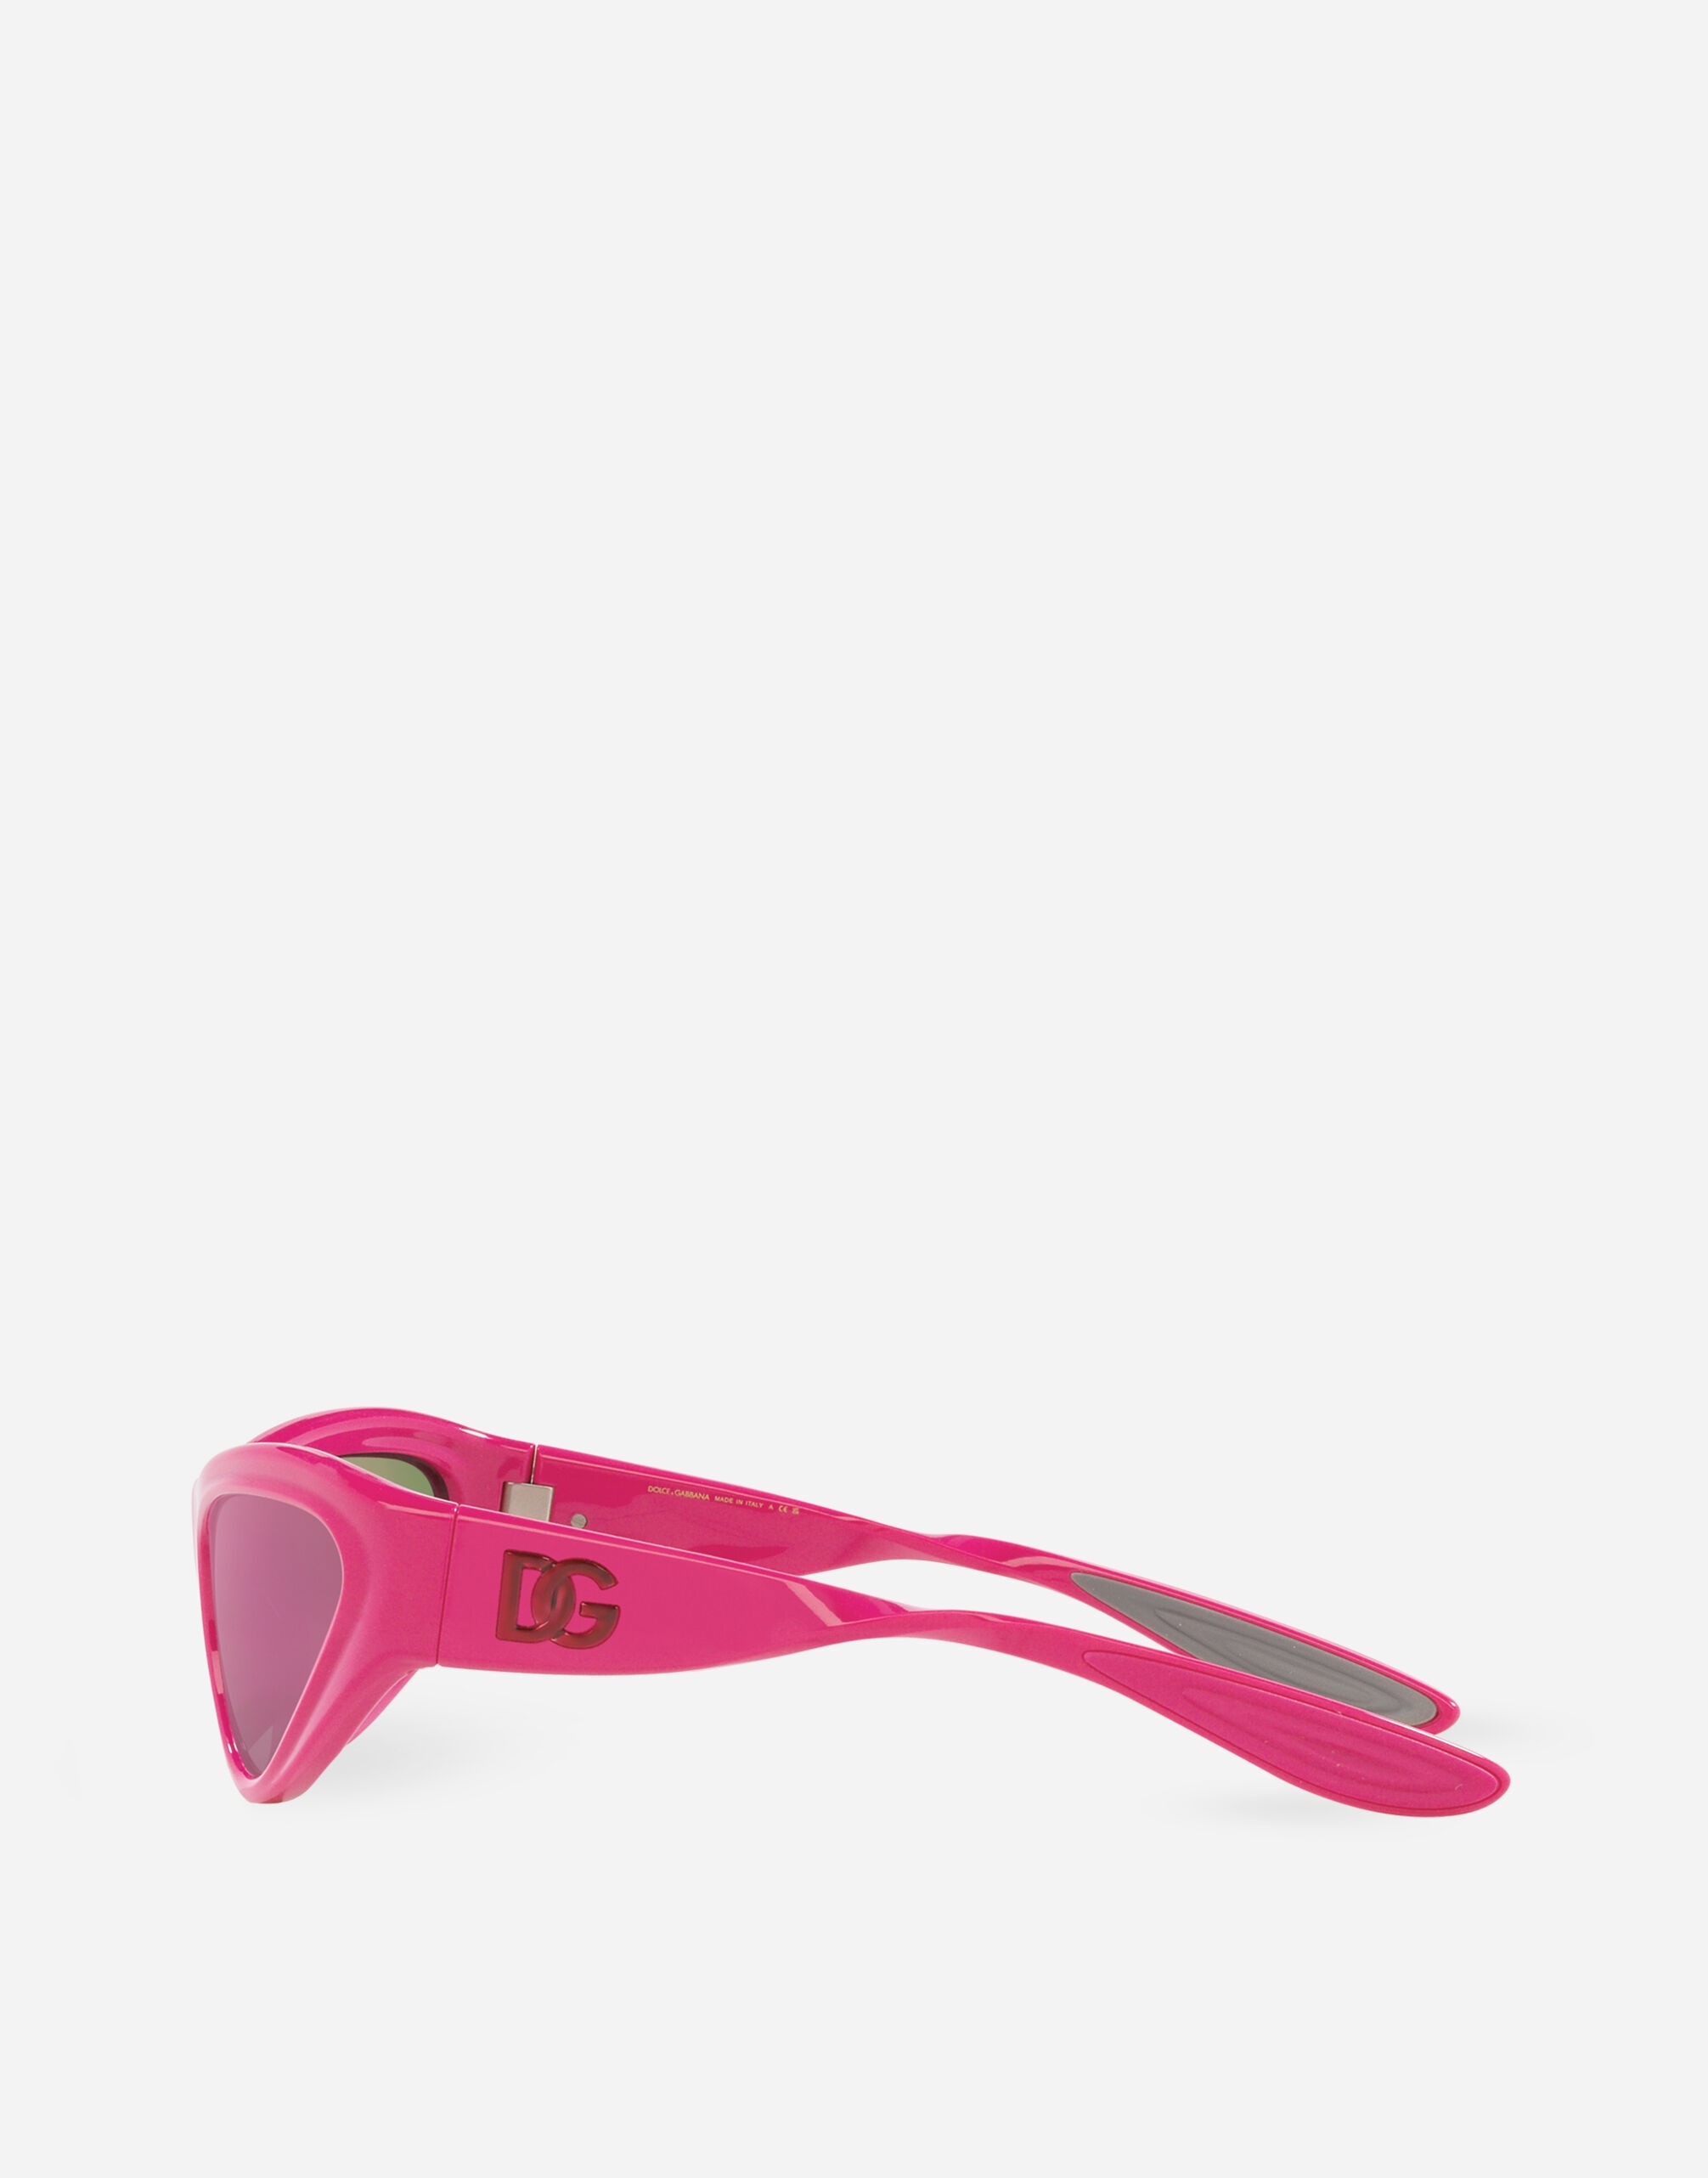 DG Toy sunglasses - 3